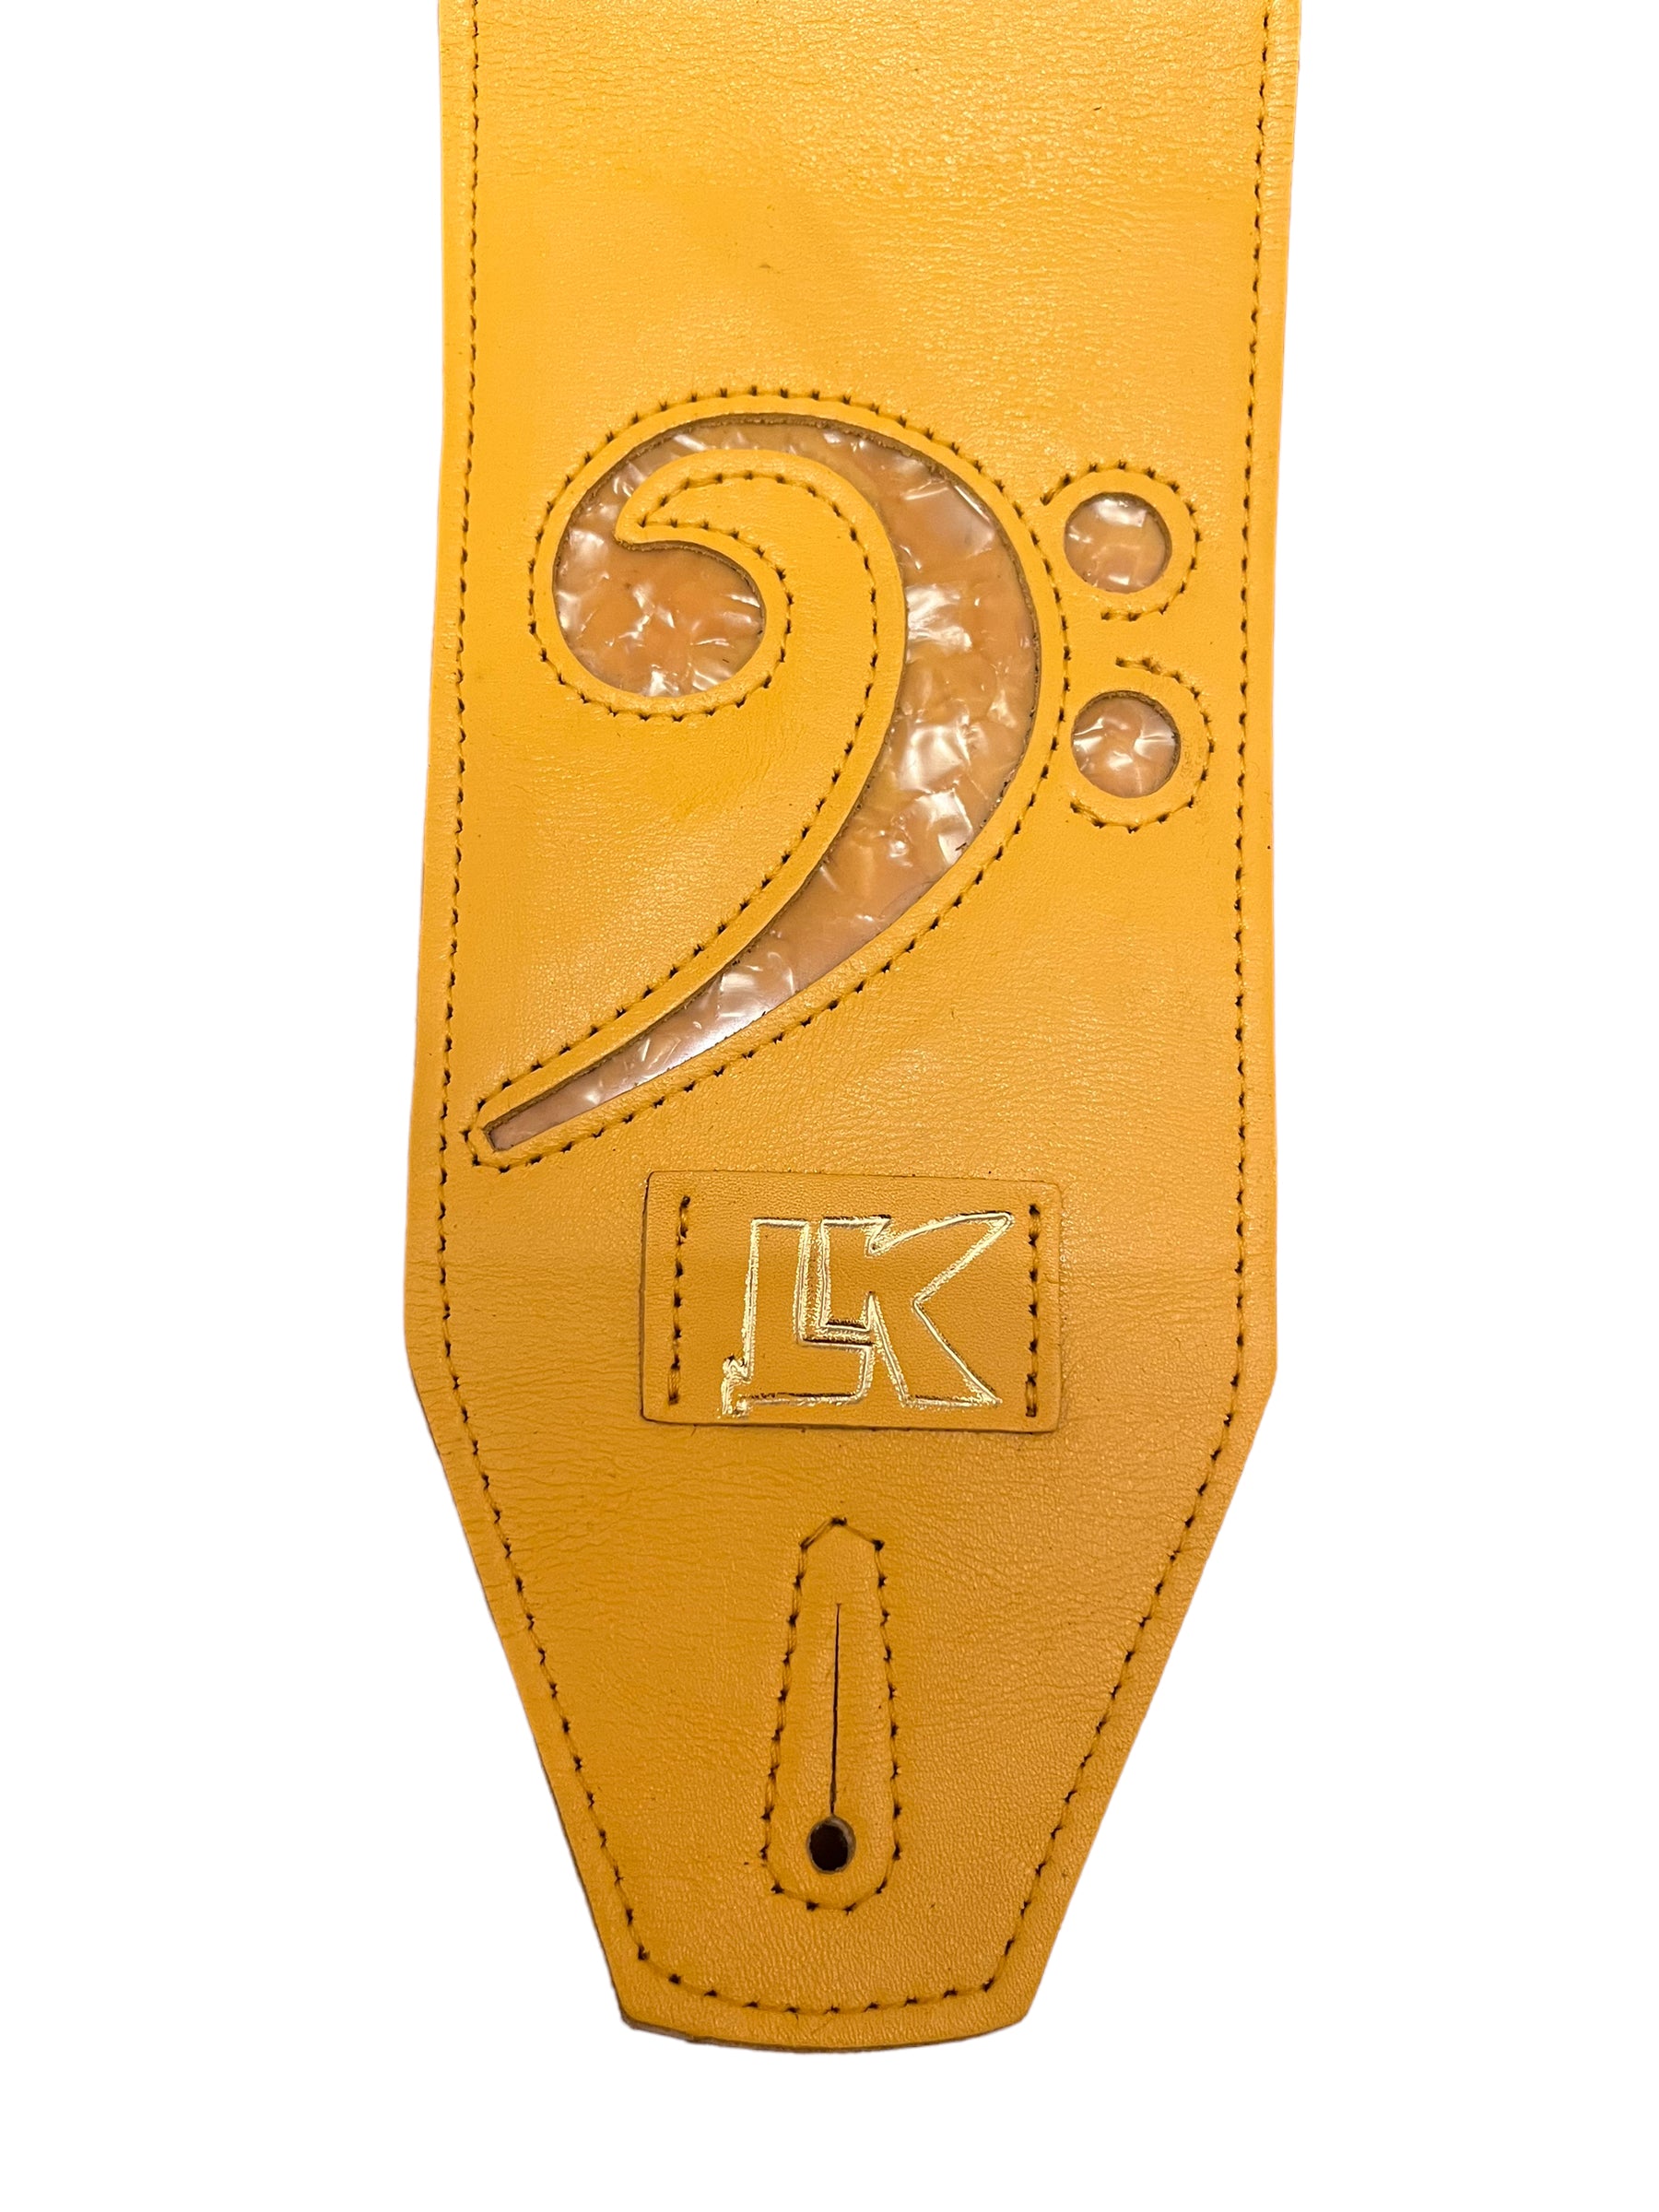 LK 4" Banana Split Yellow F Clef Strap Limited Edition!